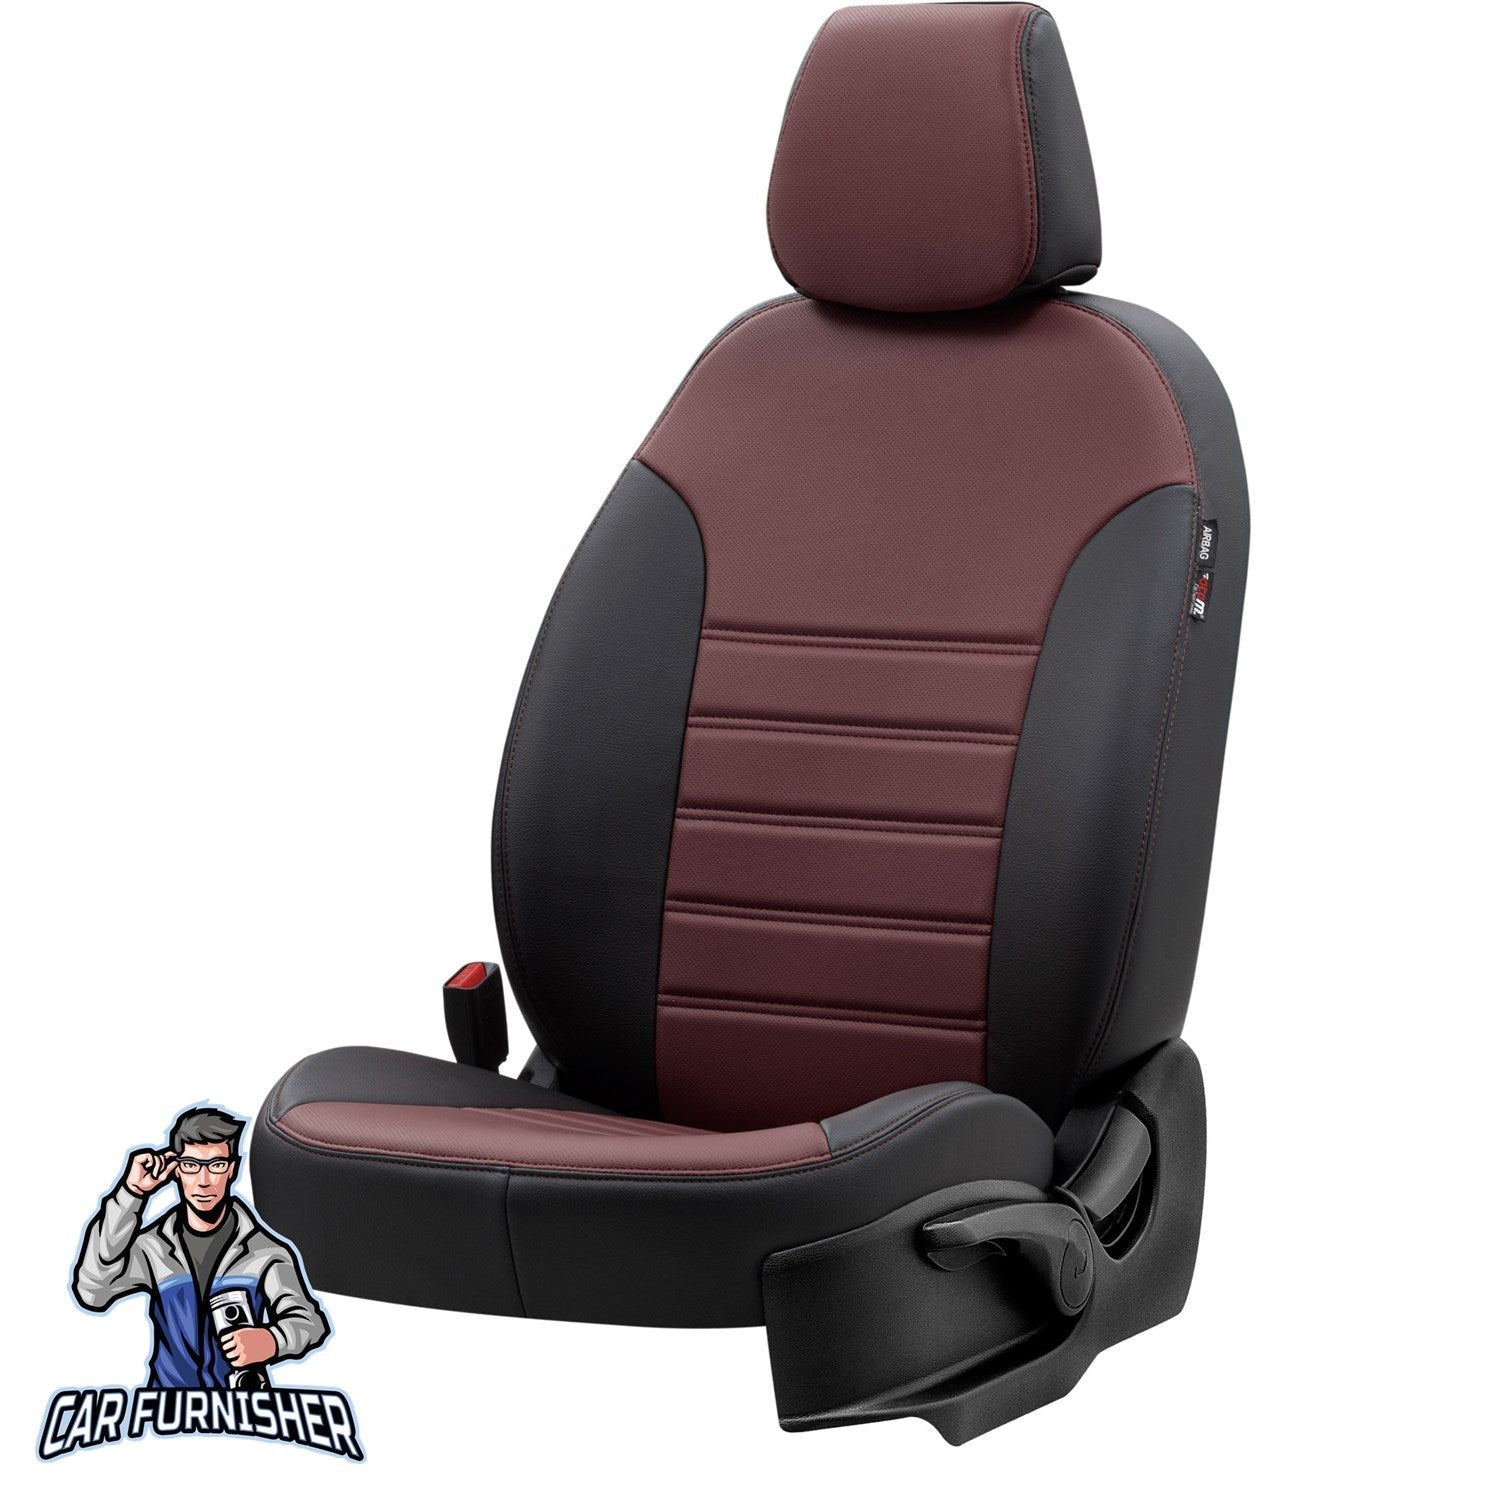 Fiat Marea Car Seat Covers 1996-2007 Istanbul Design Burgundy Full Set (5 Seats + Handrest) Leather & Fabric